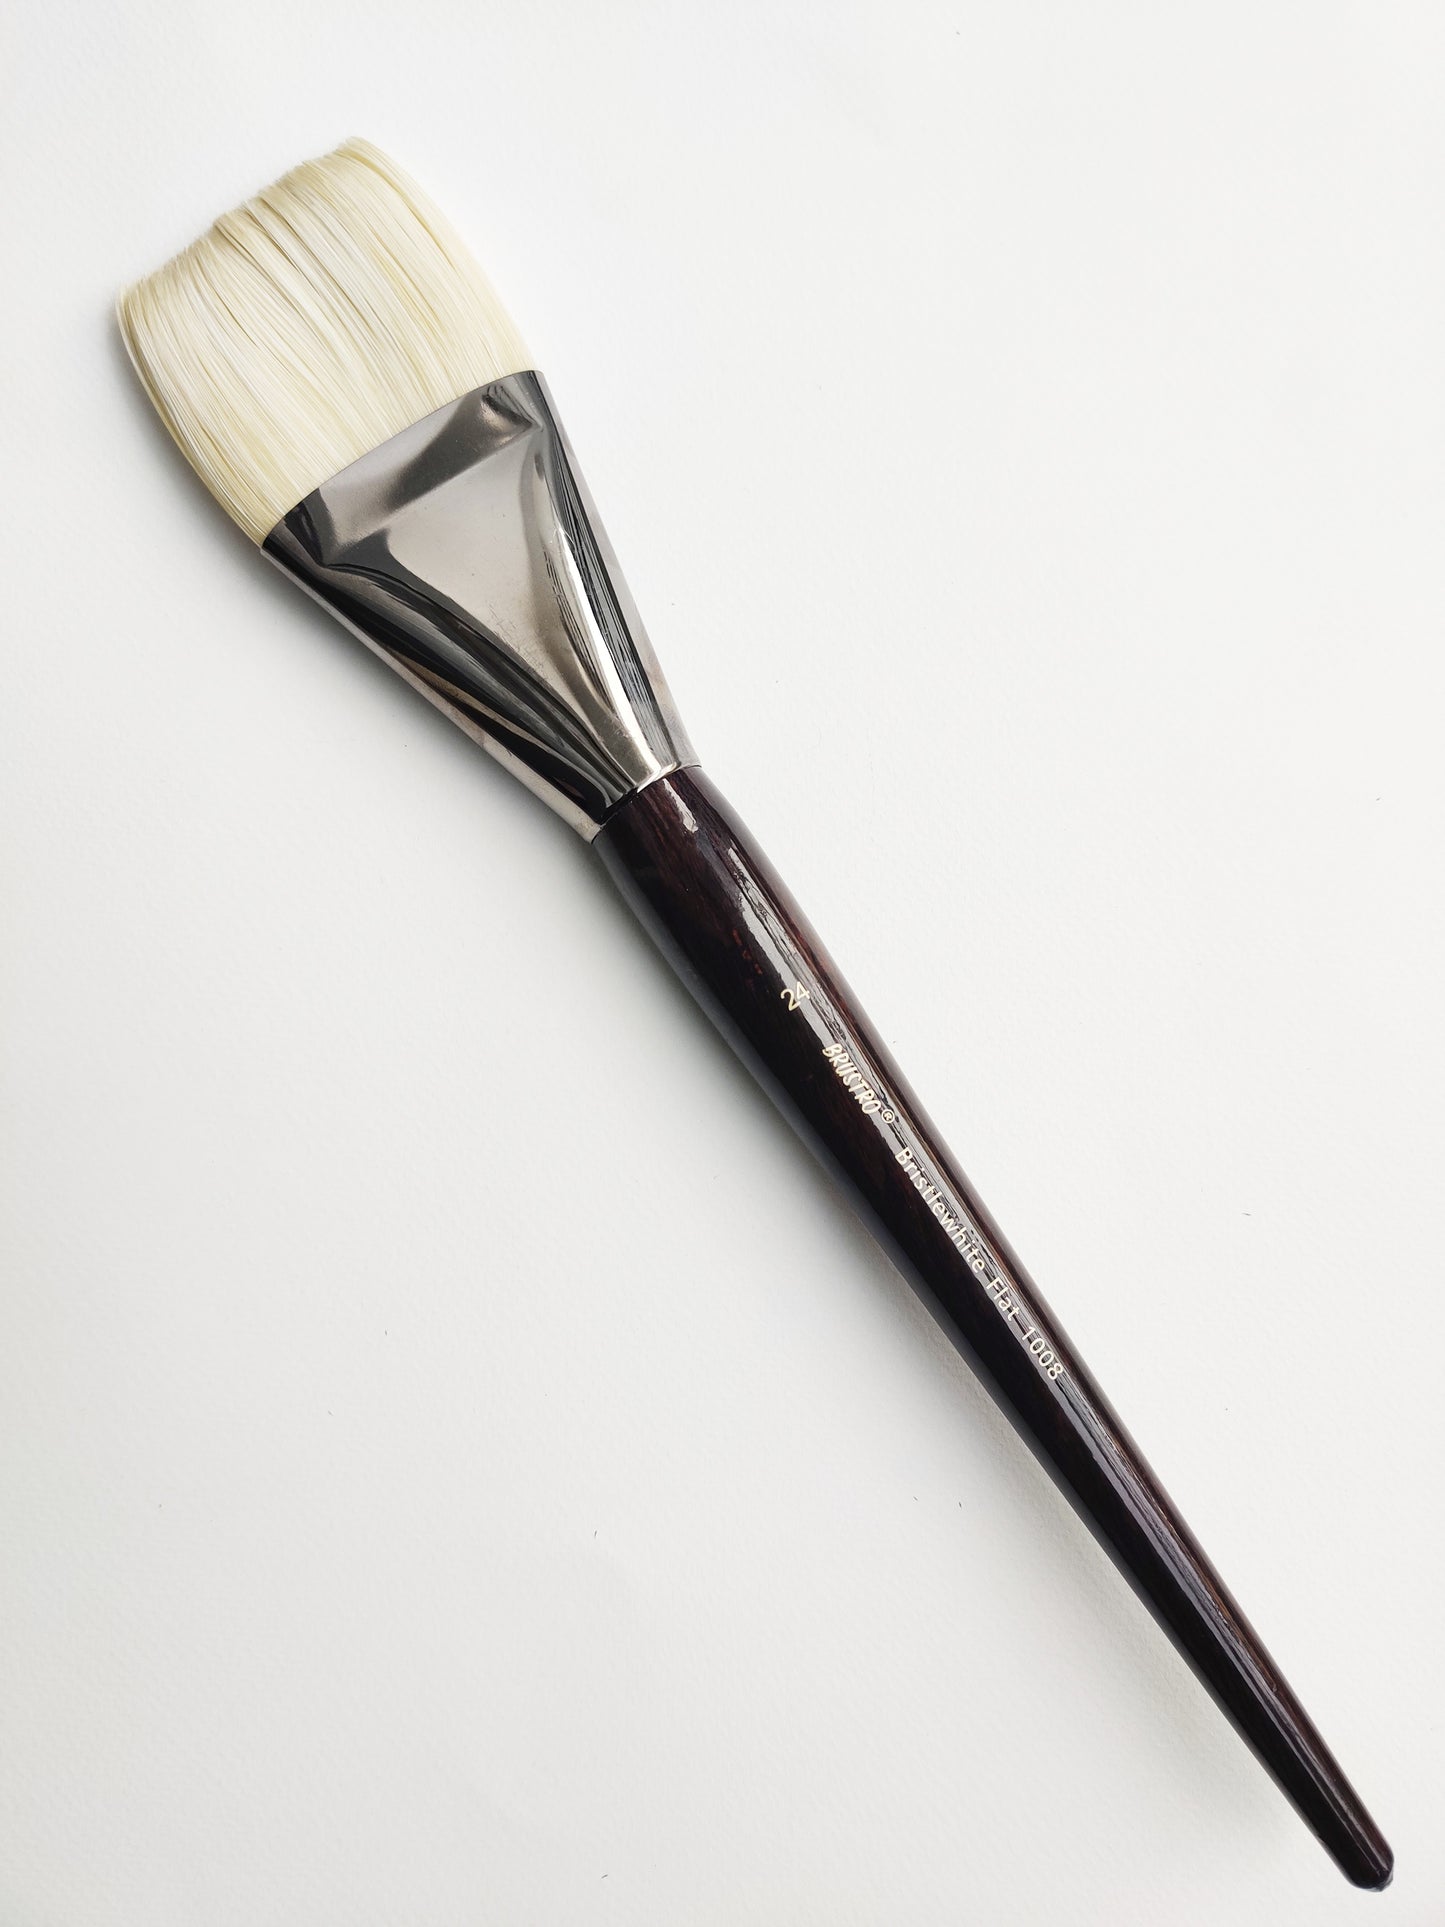 Brustro Artists Bristlewhite Flat Brush Series - 1008 - Brush No. 24 (for Oil & Acrylic)